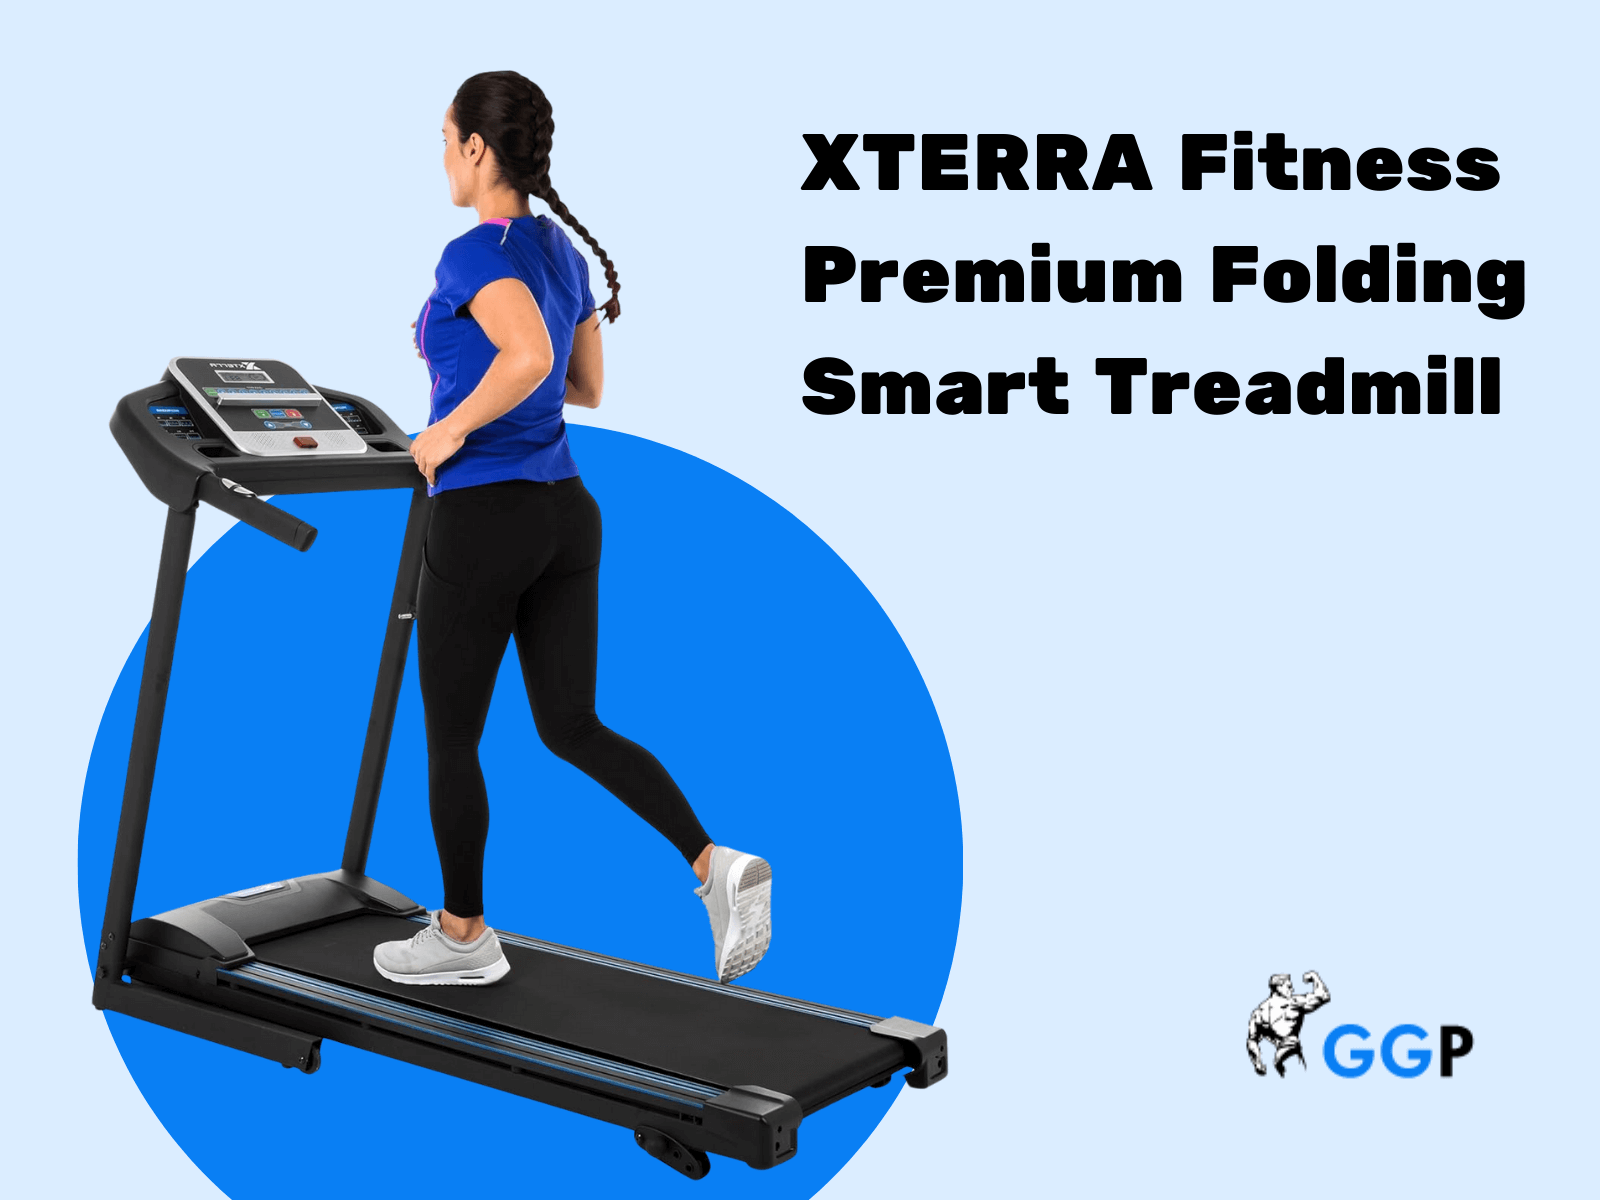 XTERRA fitness premium foldable smart treadmill amazon product